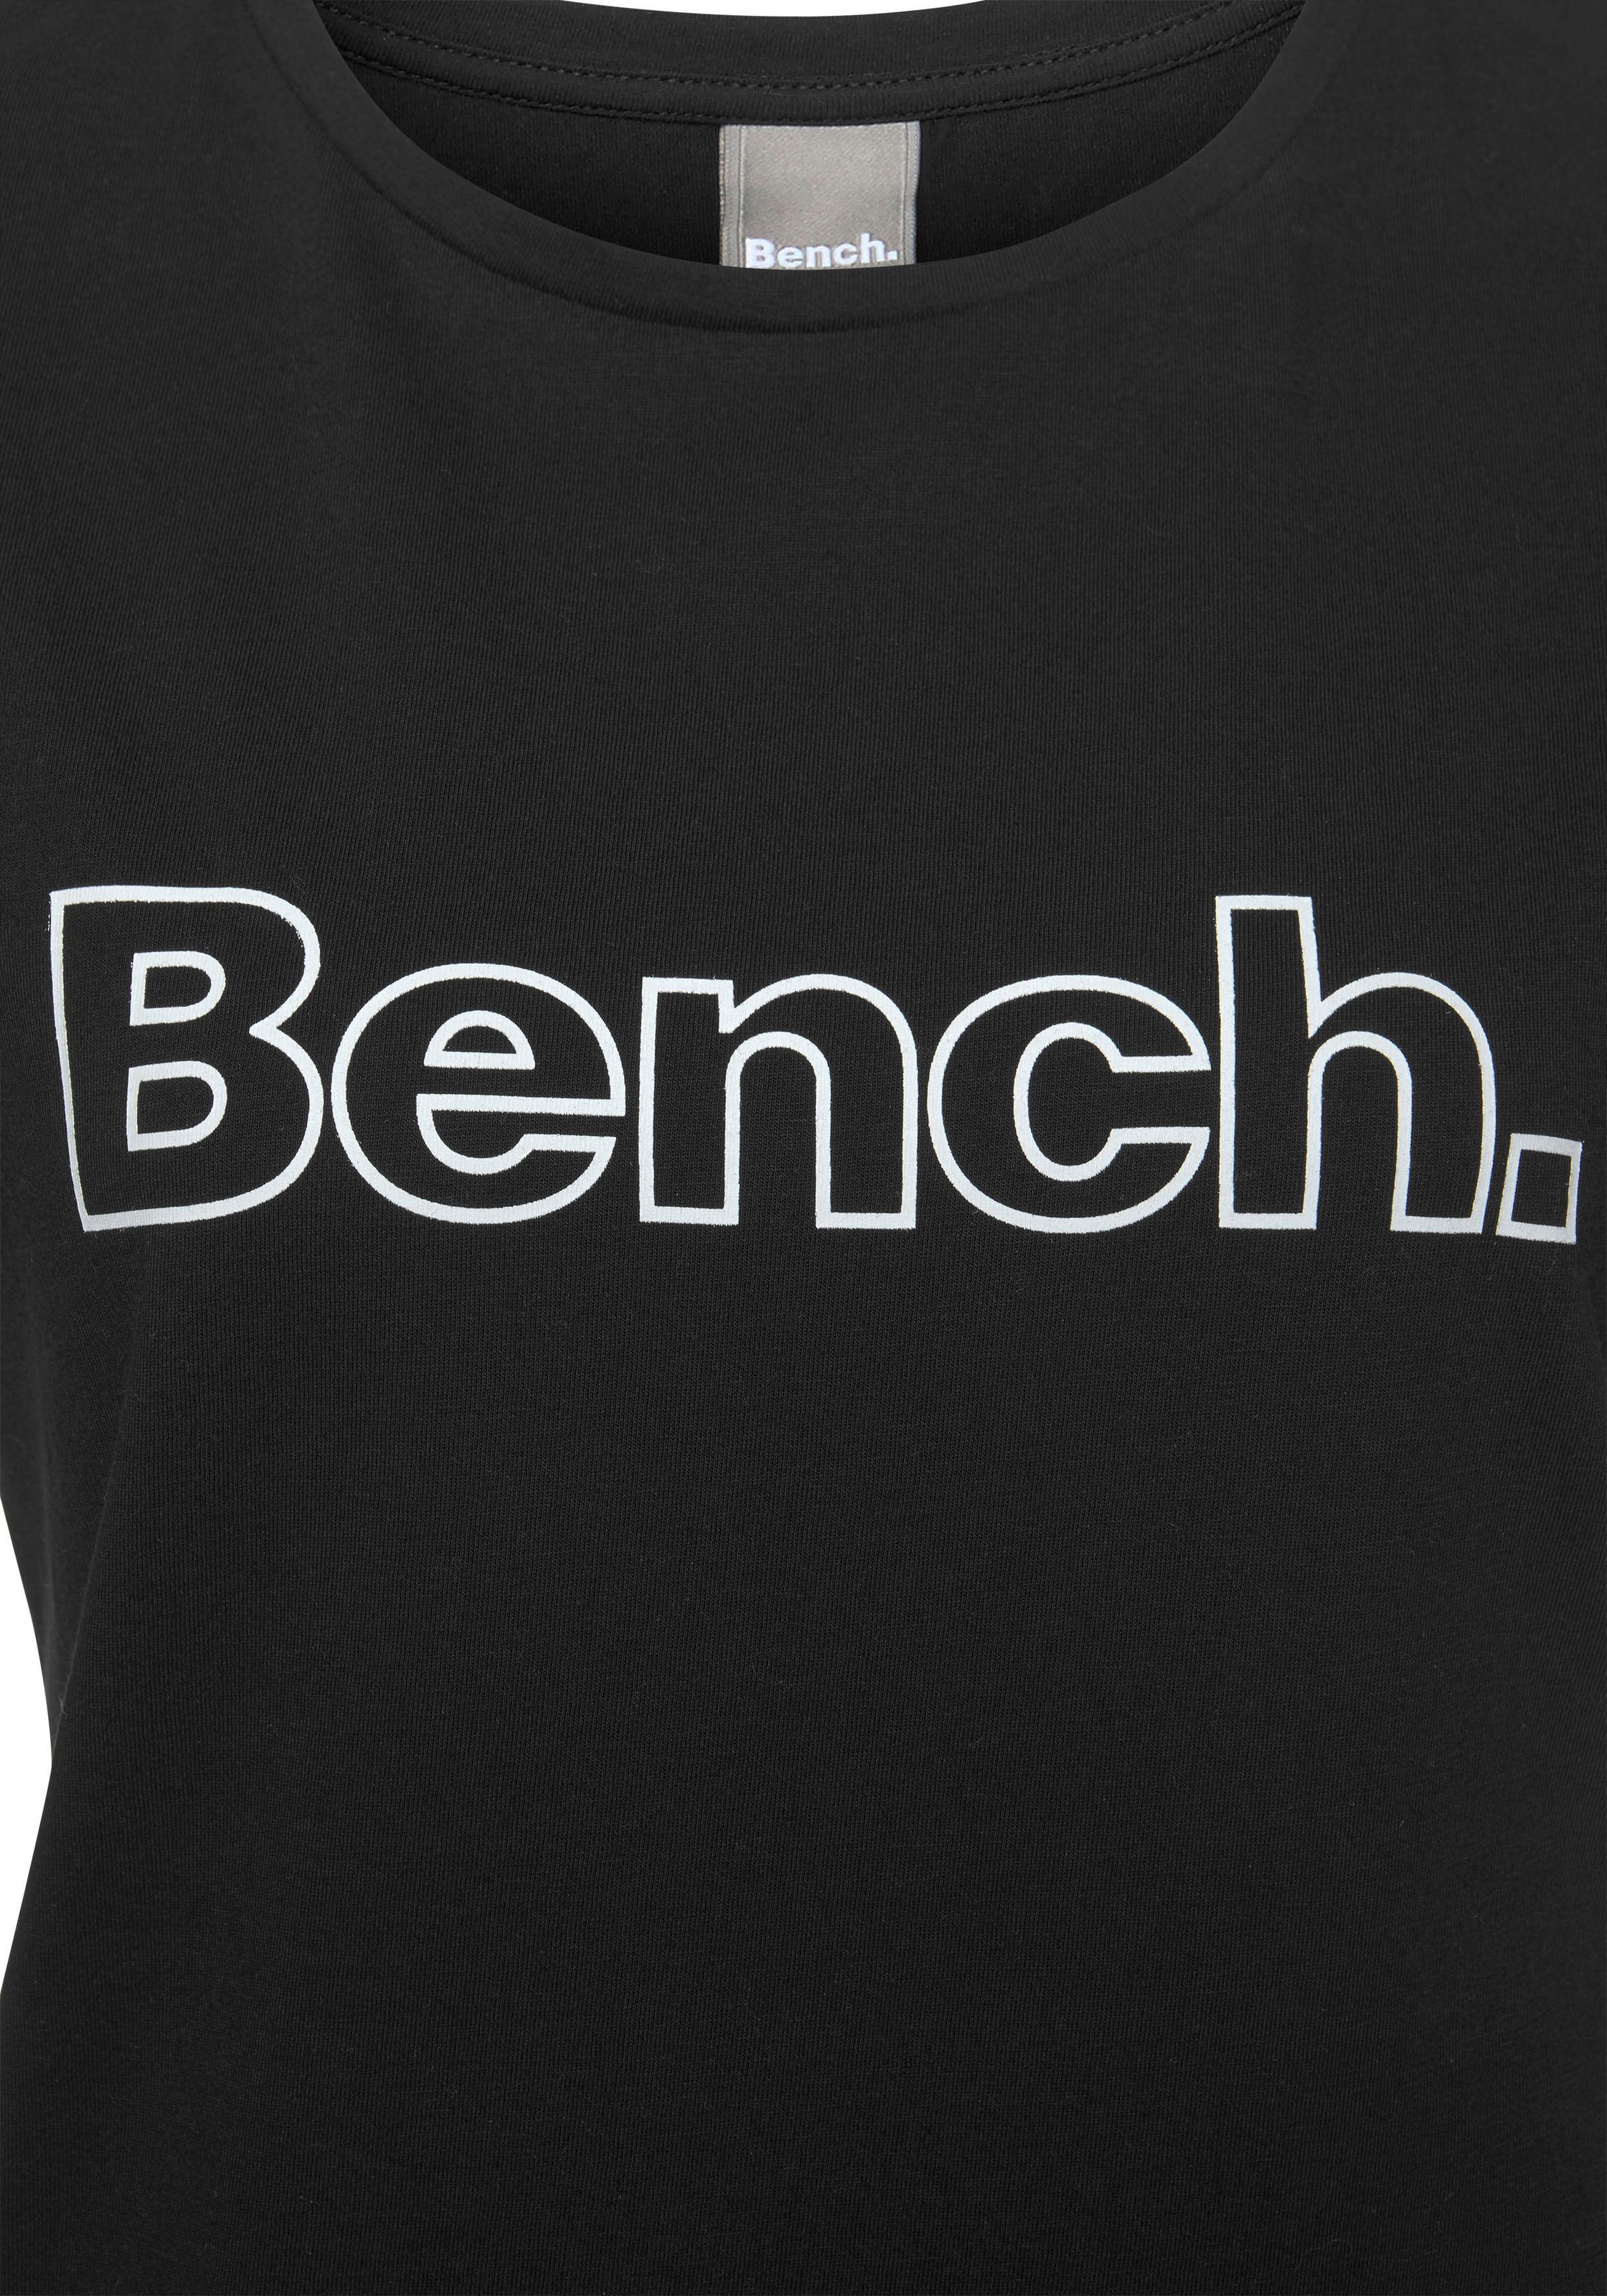 Bench. T-Shirt shoppen